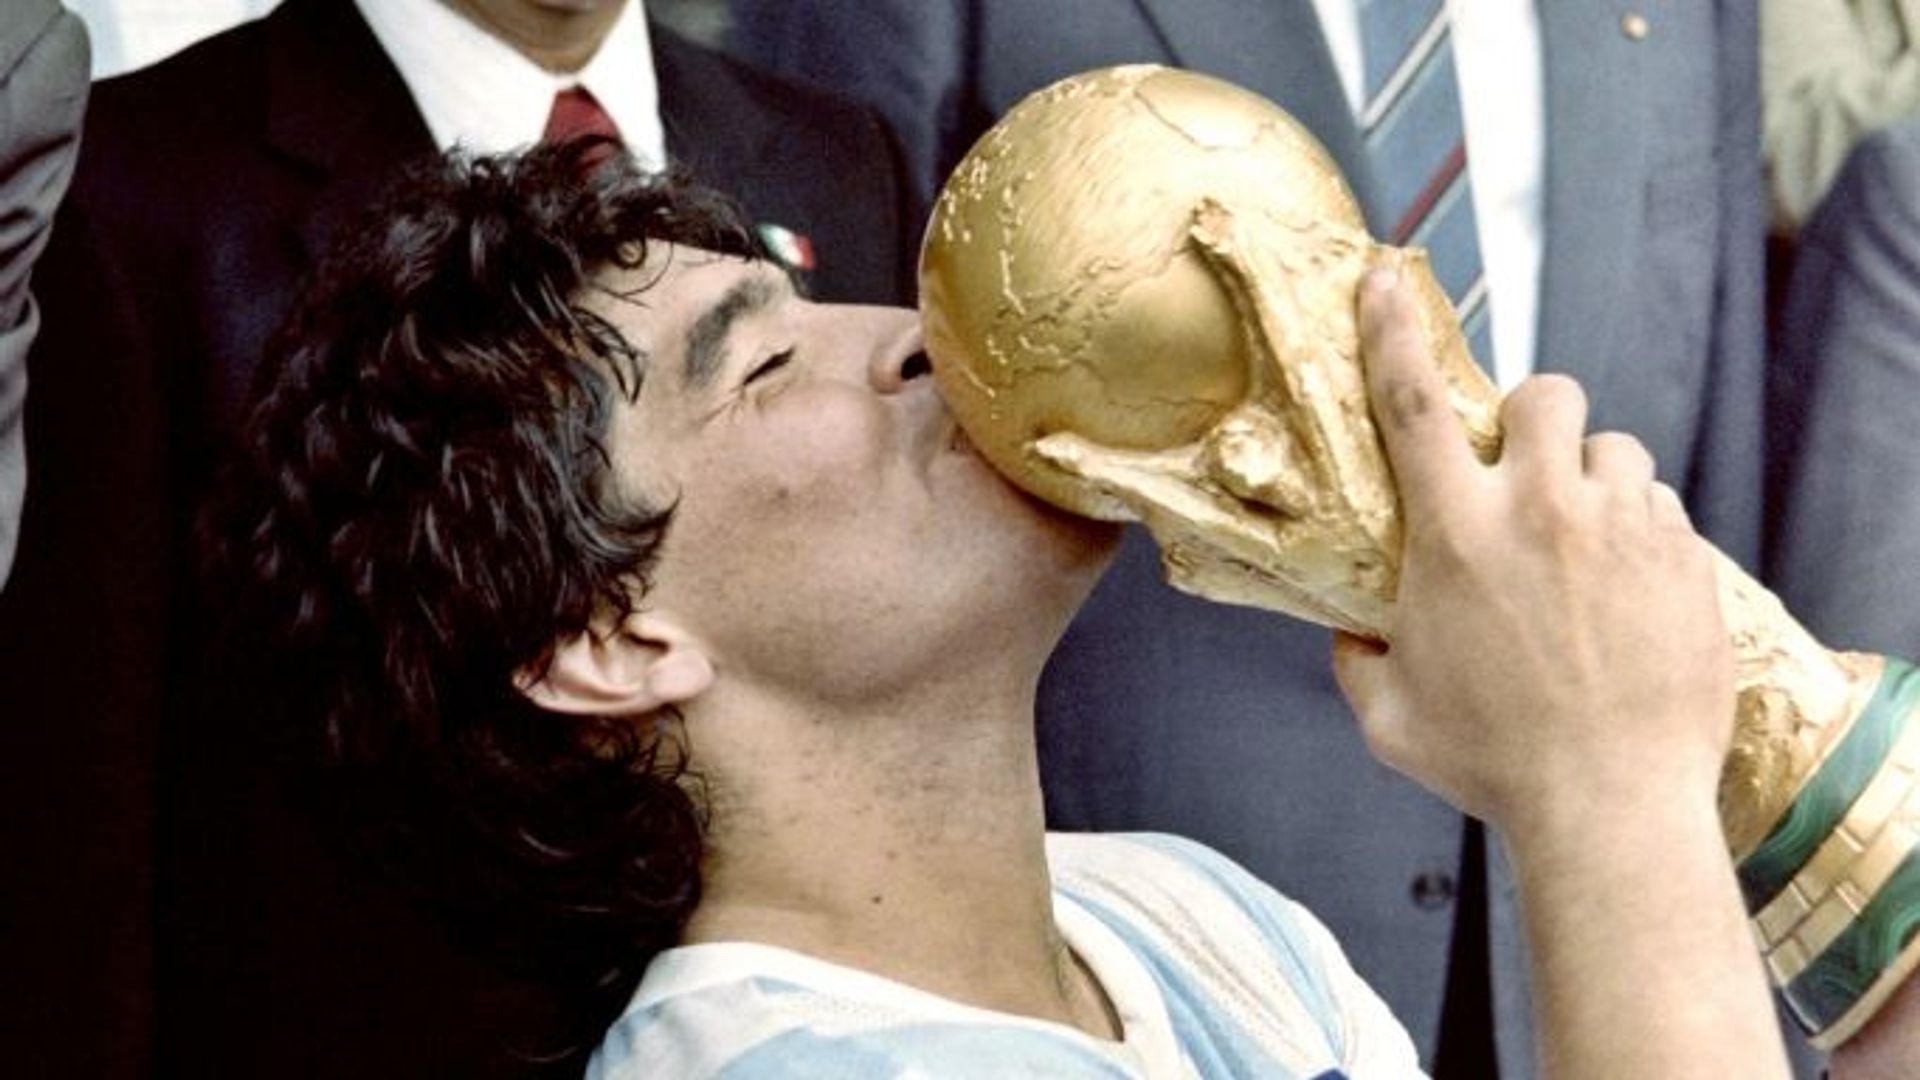 Diego Maradona: The genius and the controversy